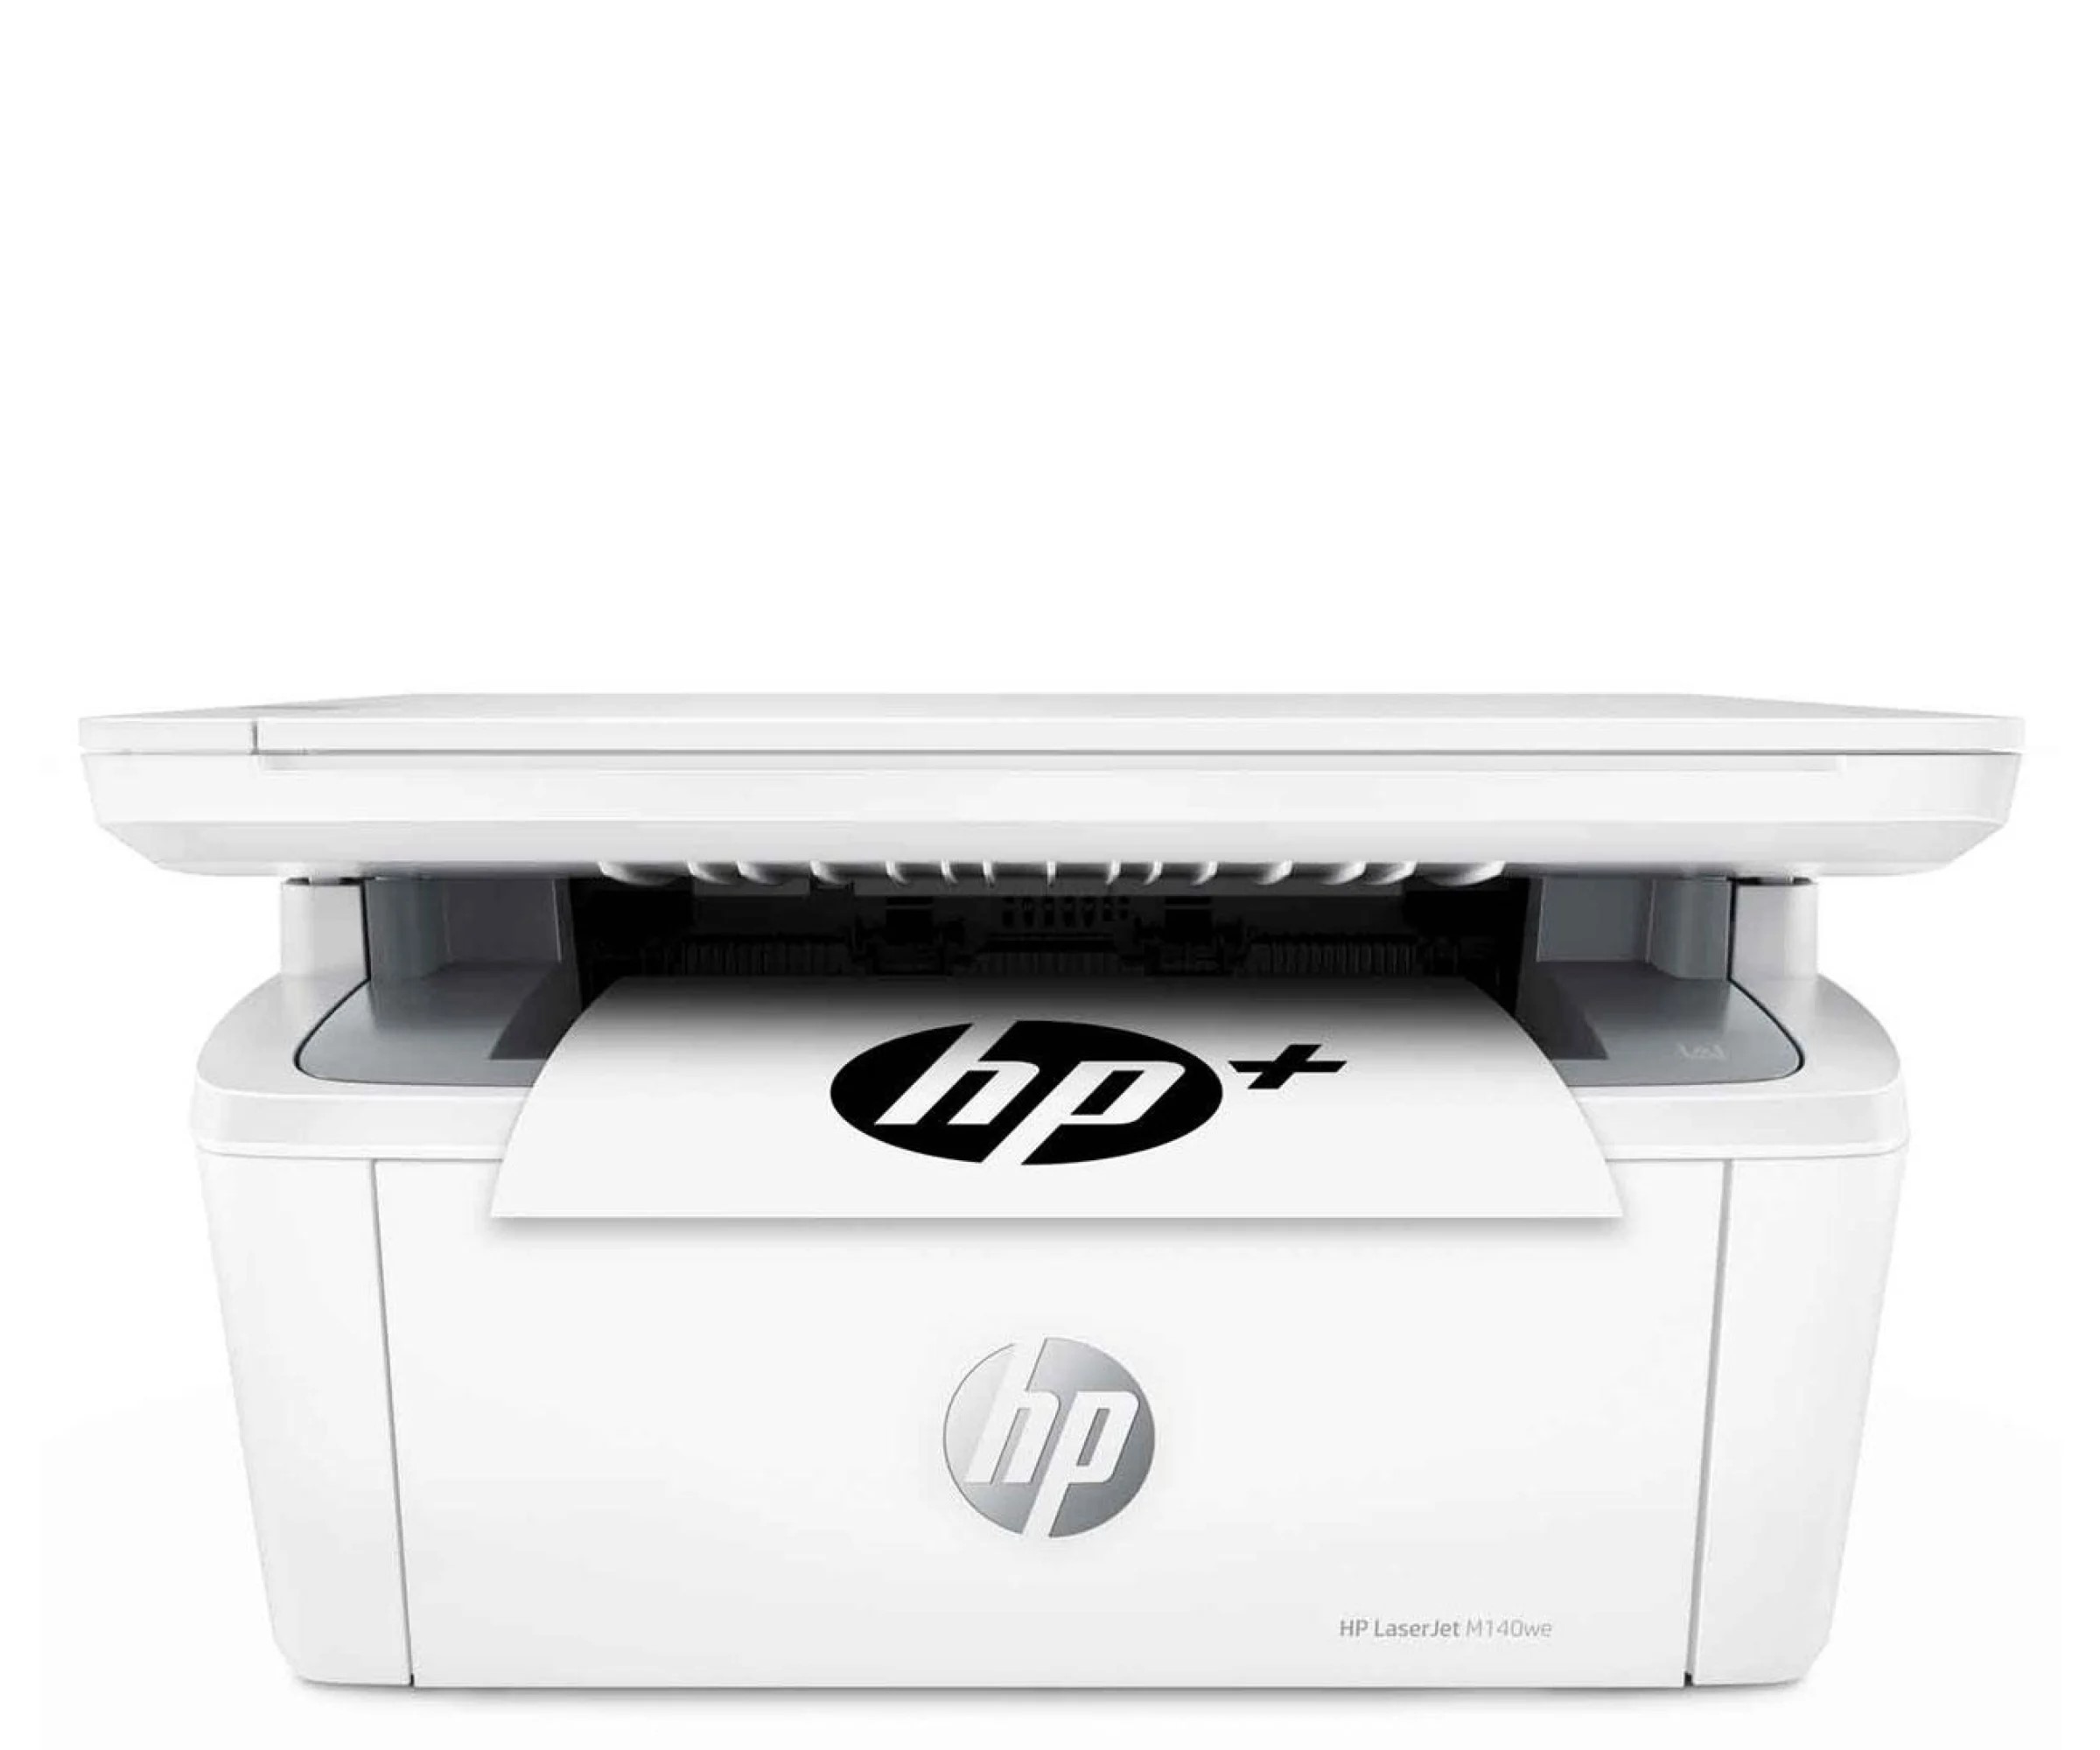 HP Pro 7720o.jpg